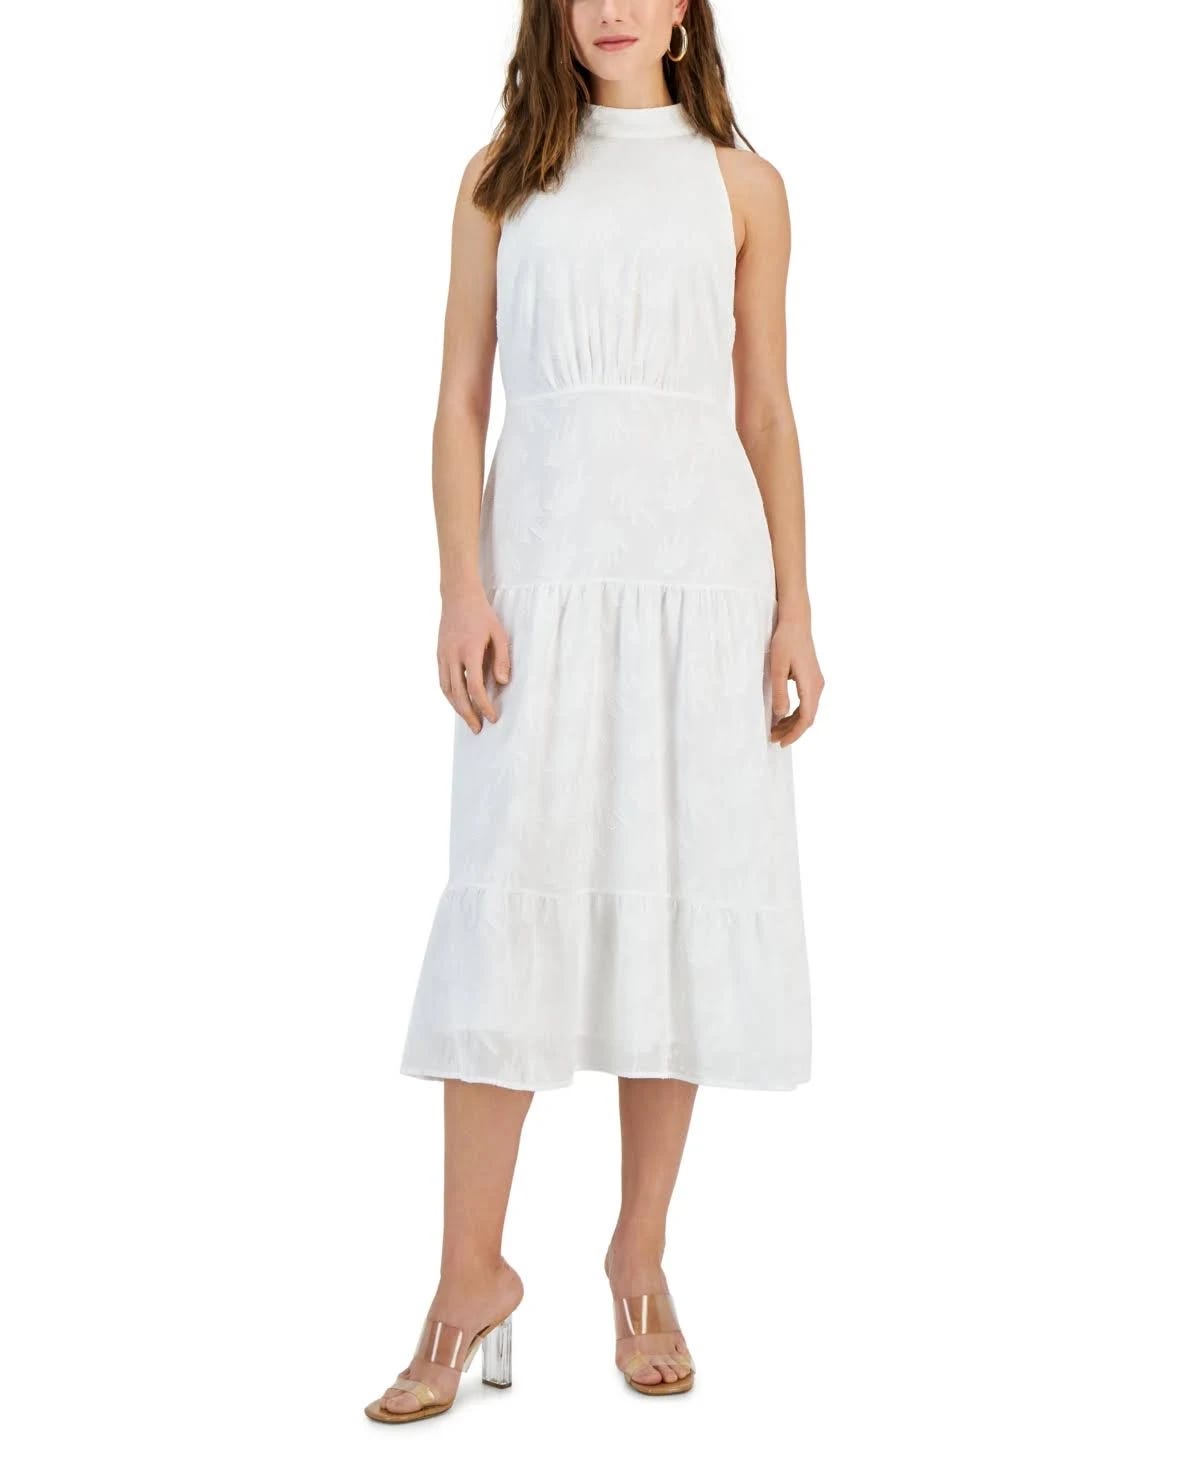 Sam Edelman White Strap Midi Dress with Tie-Back | Image